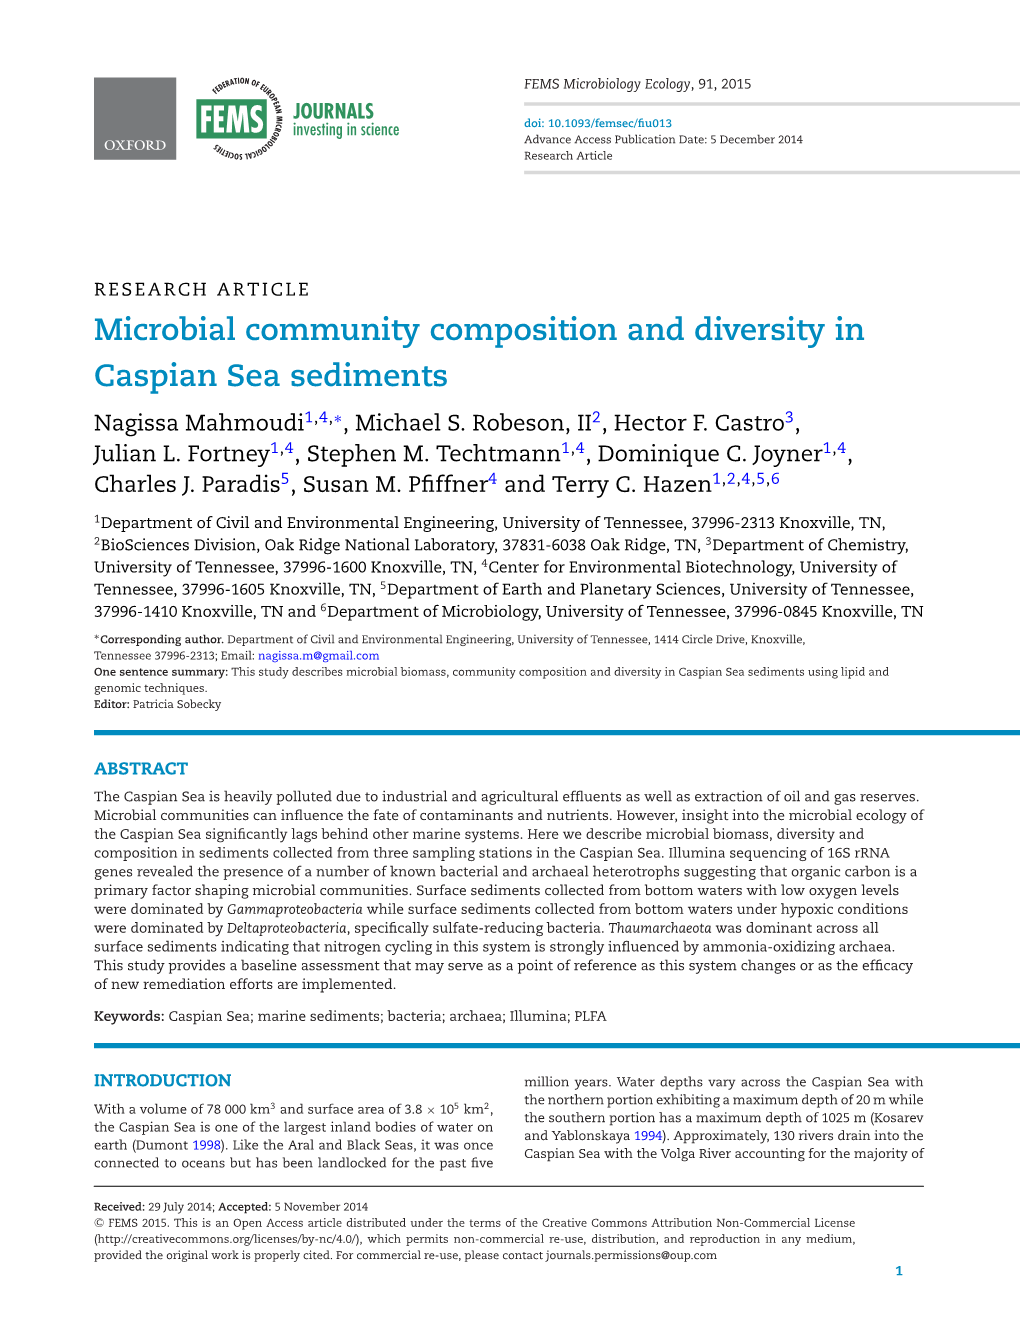 Microbial Community Composition and Diversity in Caspian Sea Sediments Nagissa Mahmoudi1,4,∗, Michael S